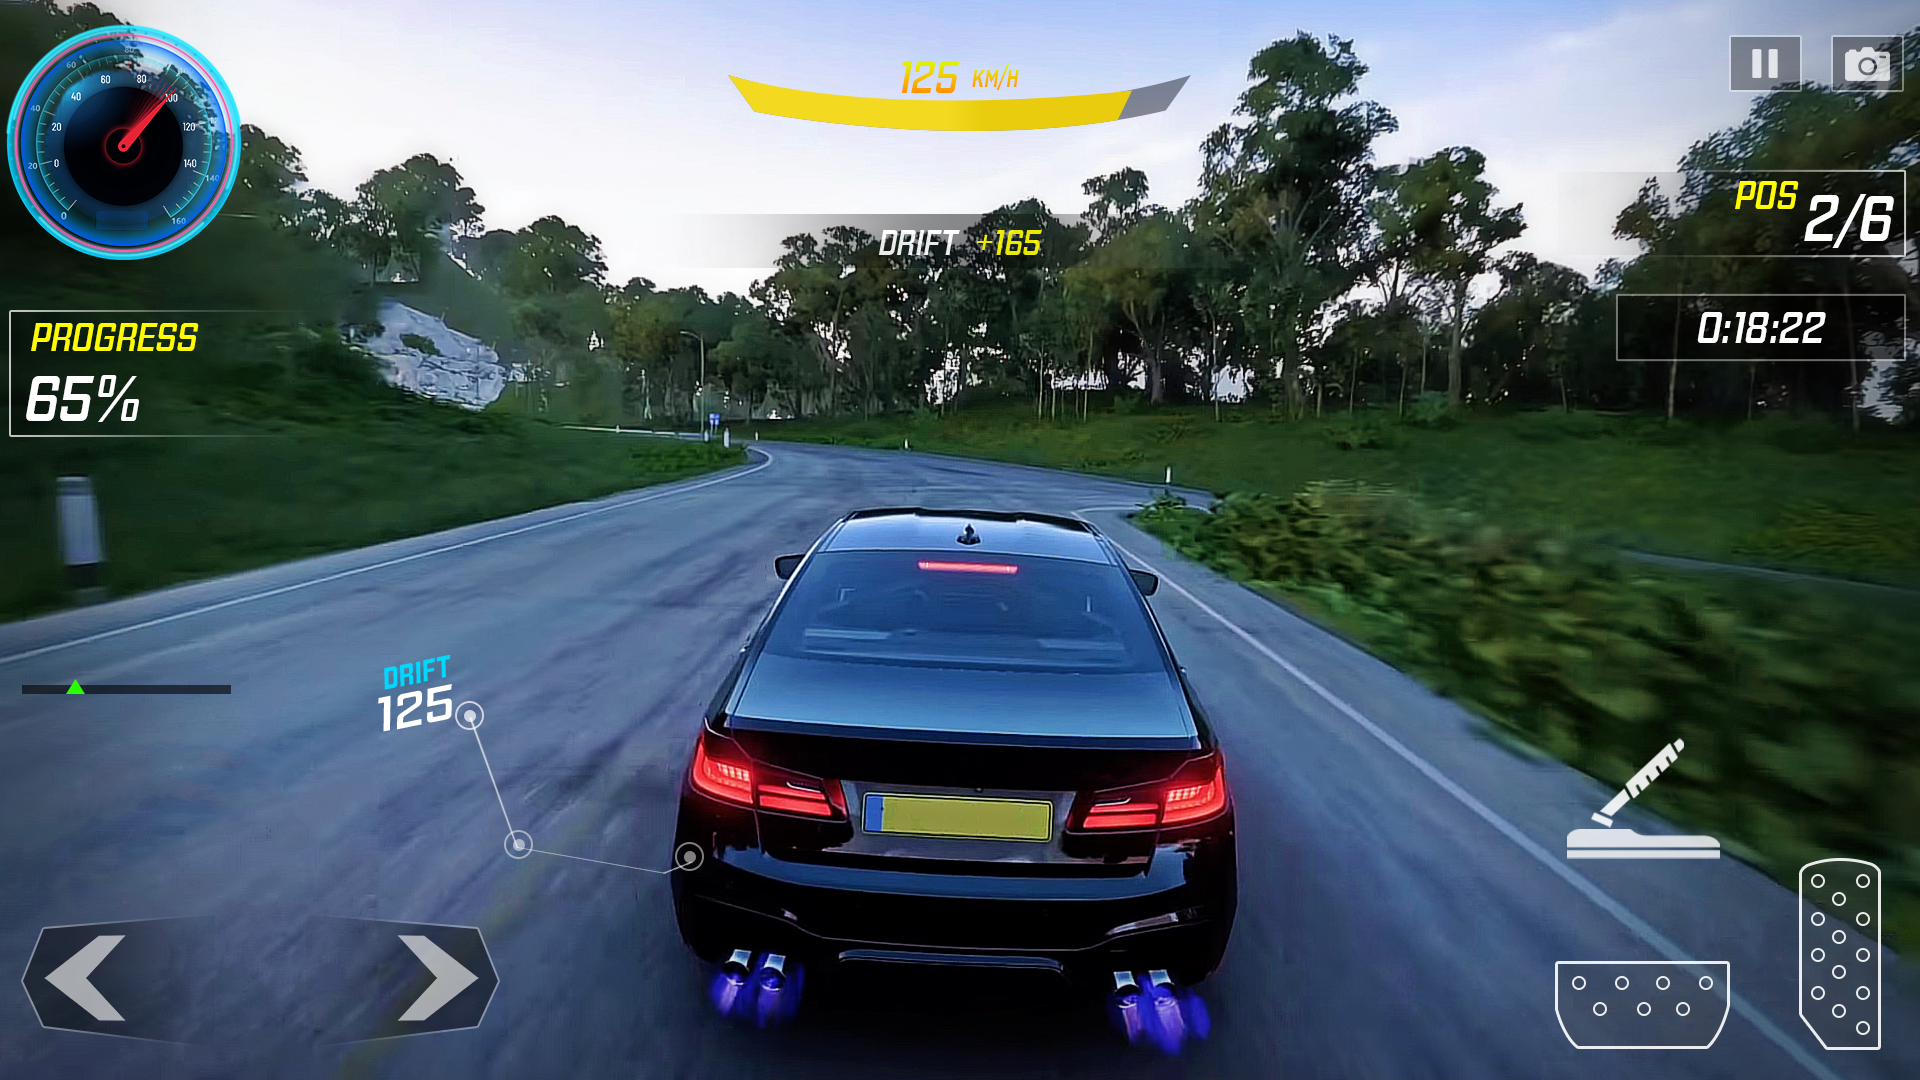 Screenshot of Car Drifting and Driving Games